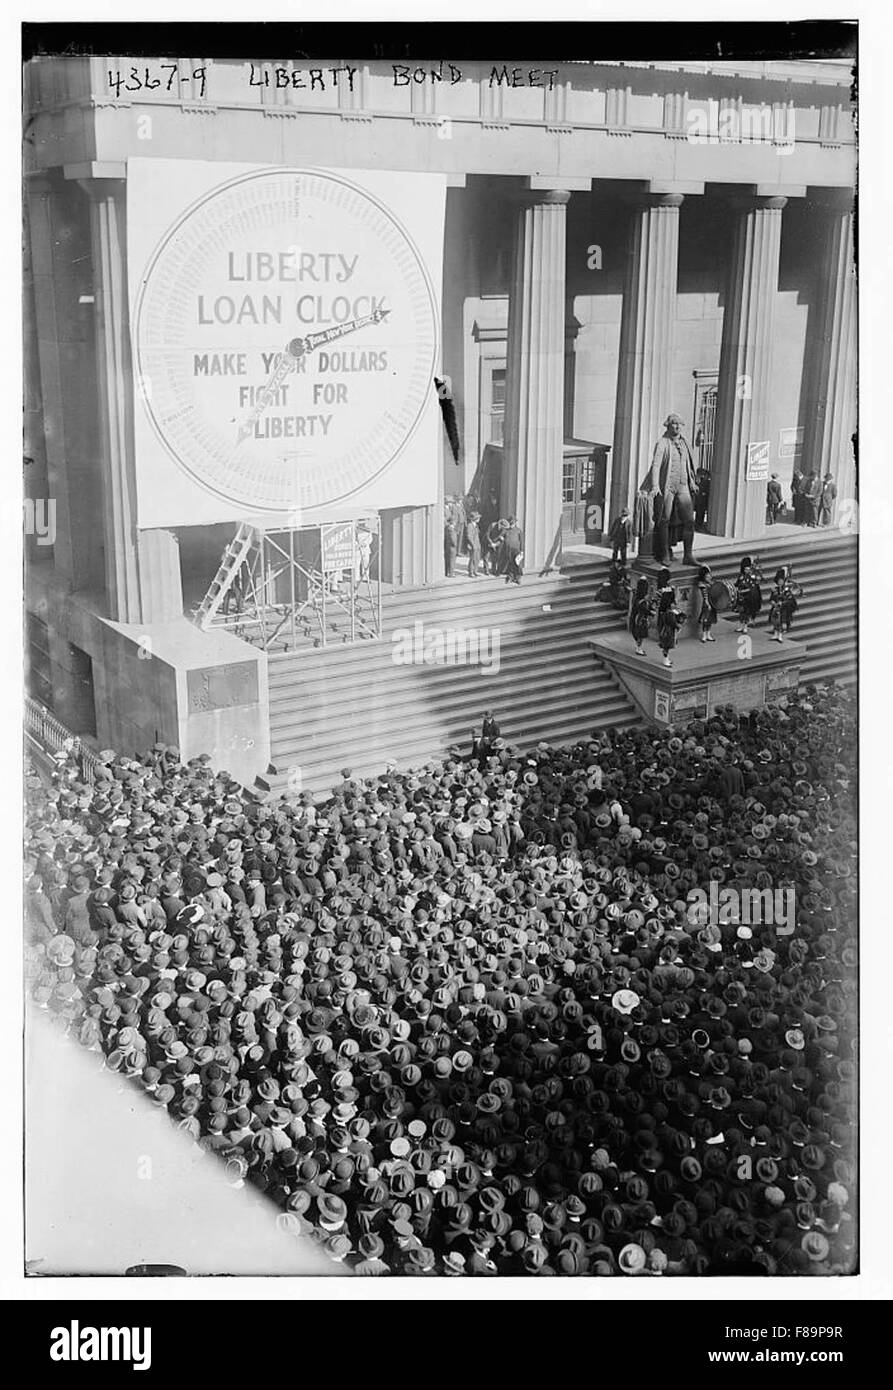 Bain News Service,, publisher. Liberty Bond Meet [between ca. 1915 and ca. 1920] Stock Photo